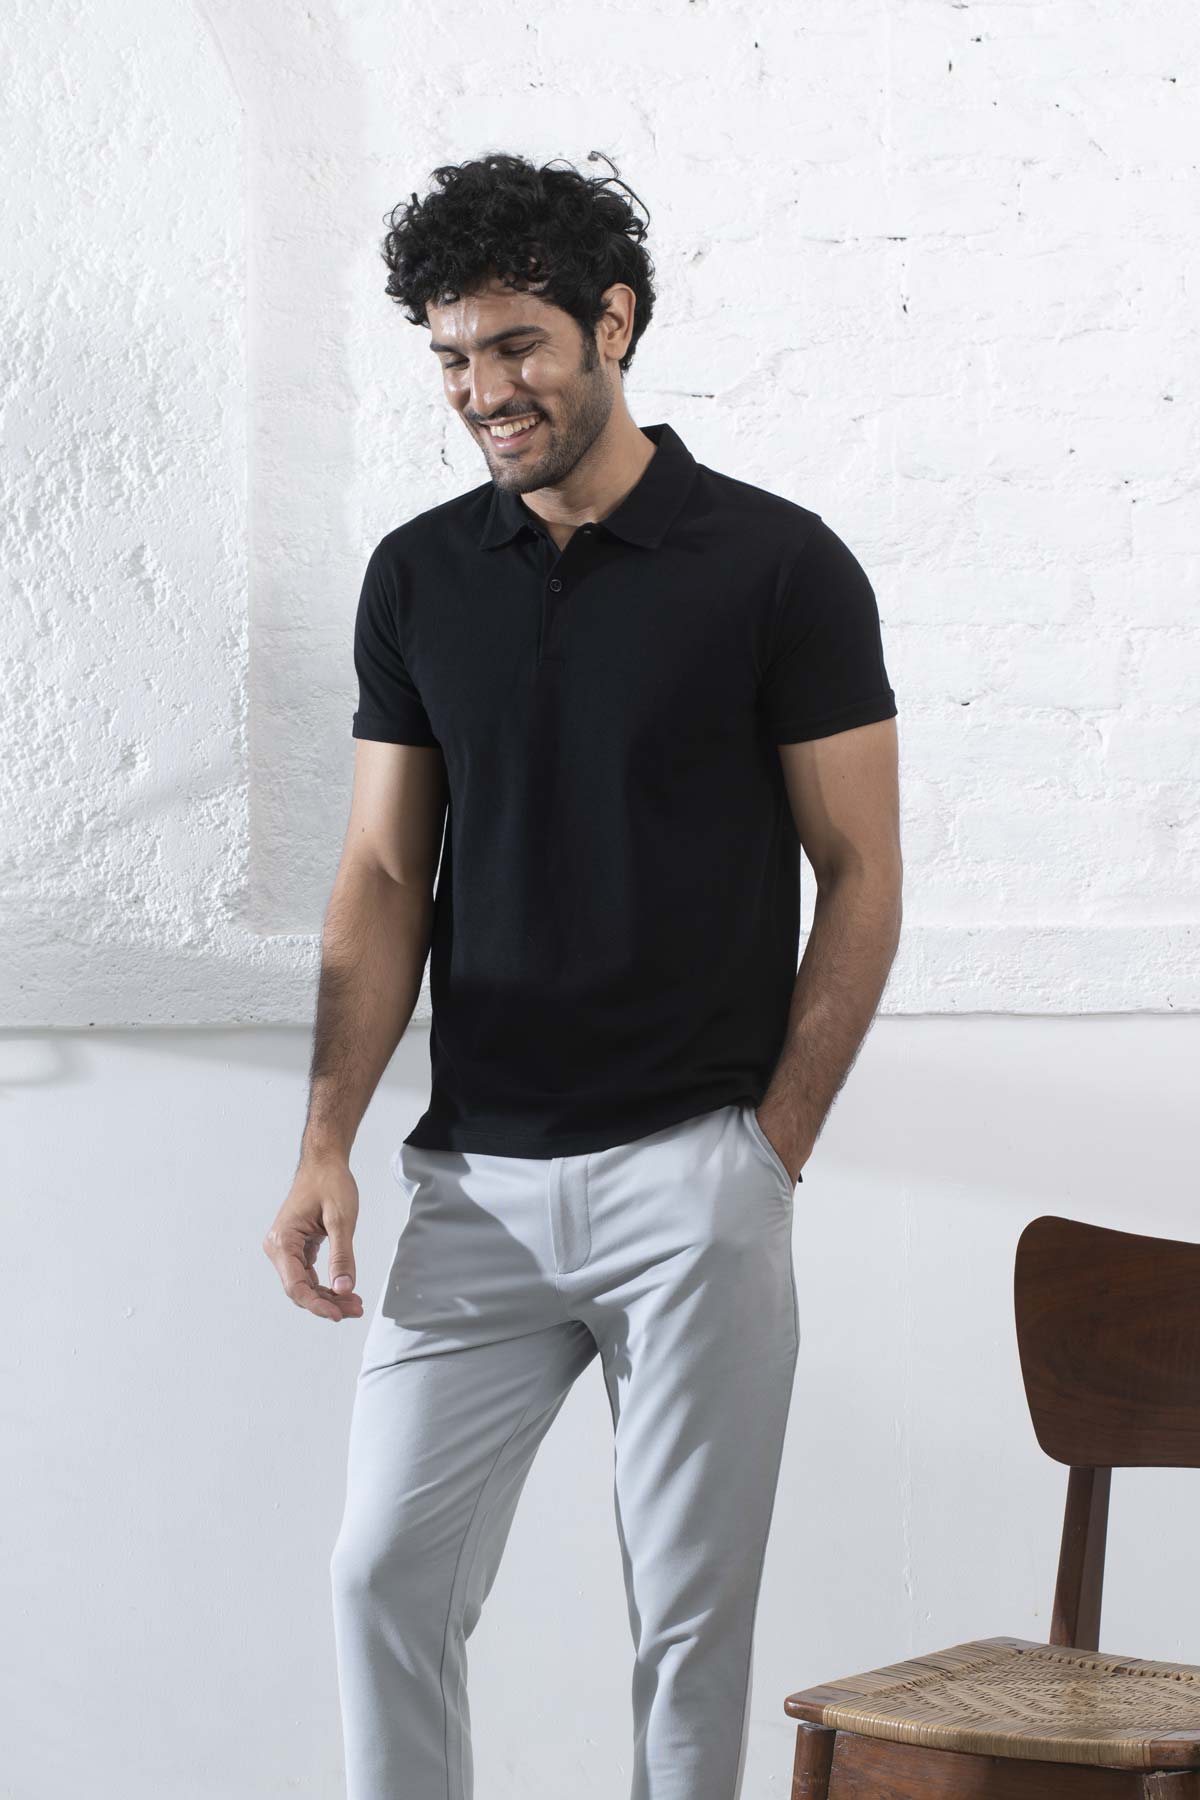 Buy Men Grey Slim Fit Textured Casual Trousers Online  710512  Allen Solly